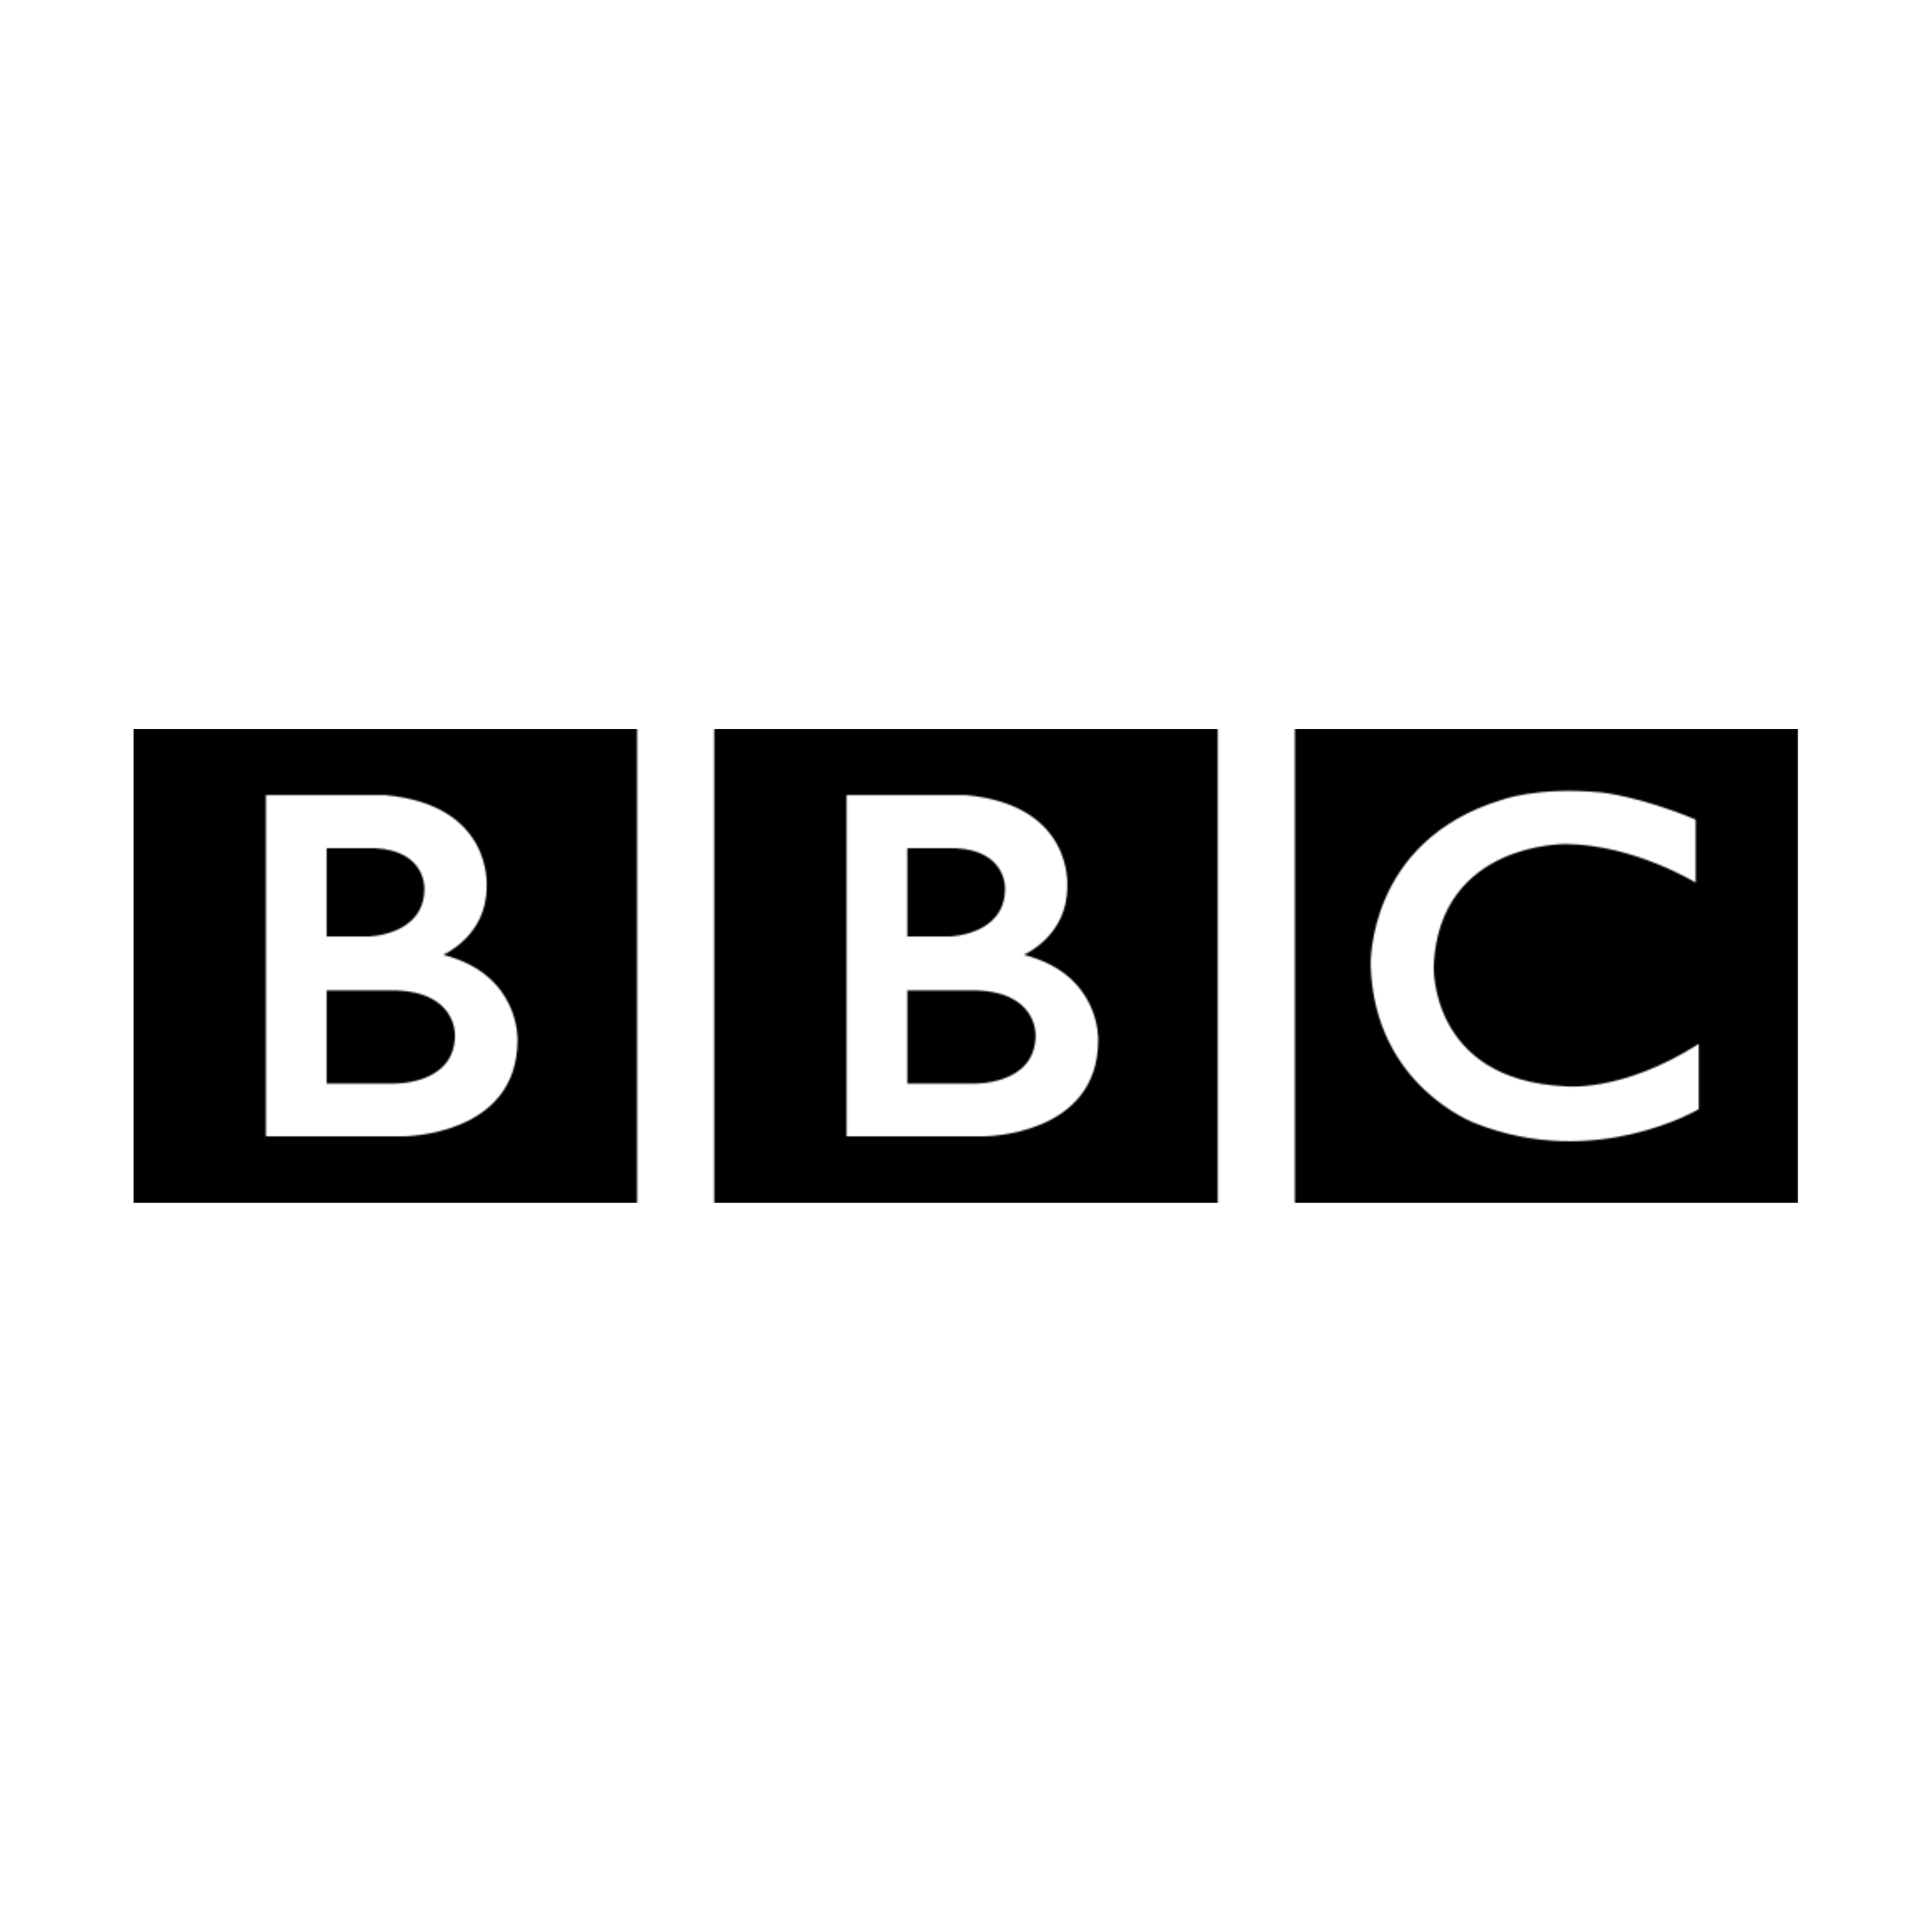 Bbc french. Bbc Телеканал. Логотип ббс. Логотип канала bbc. Bbc логотип без фона.